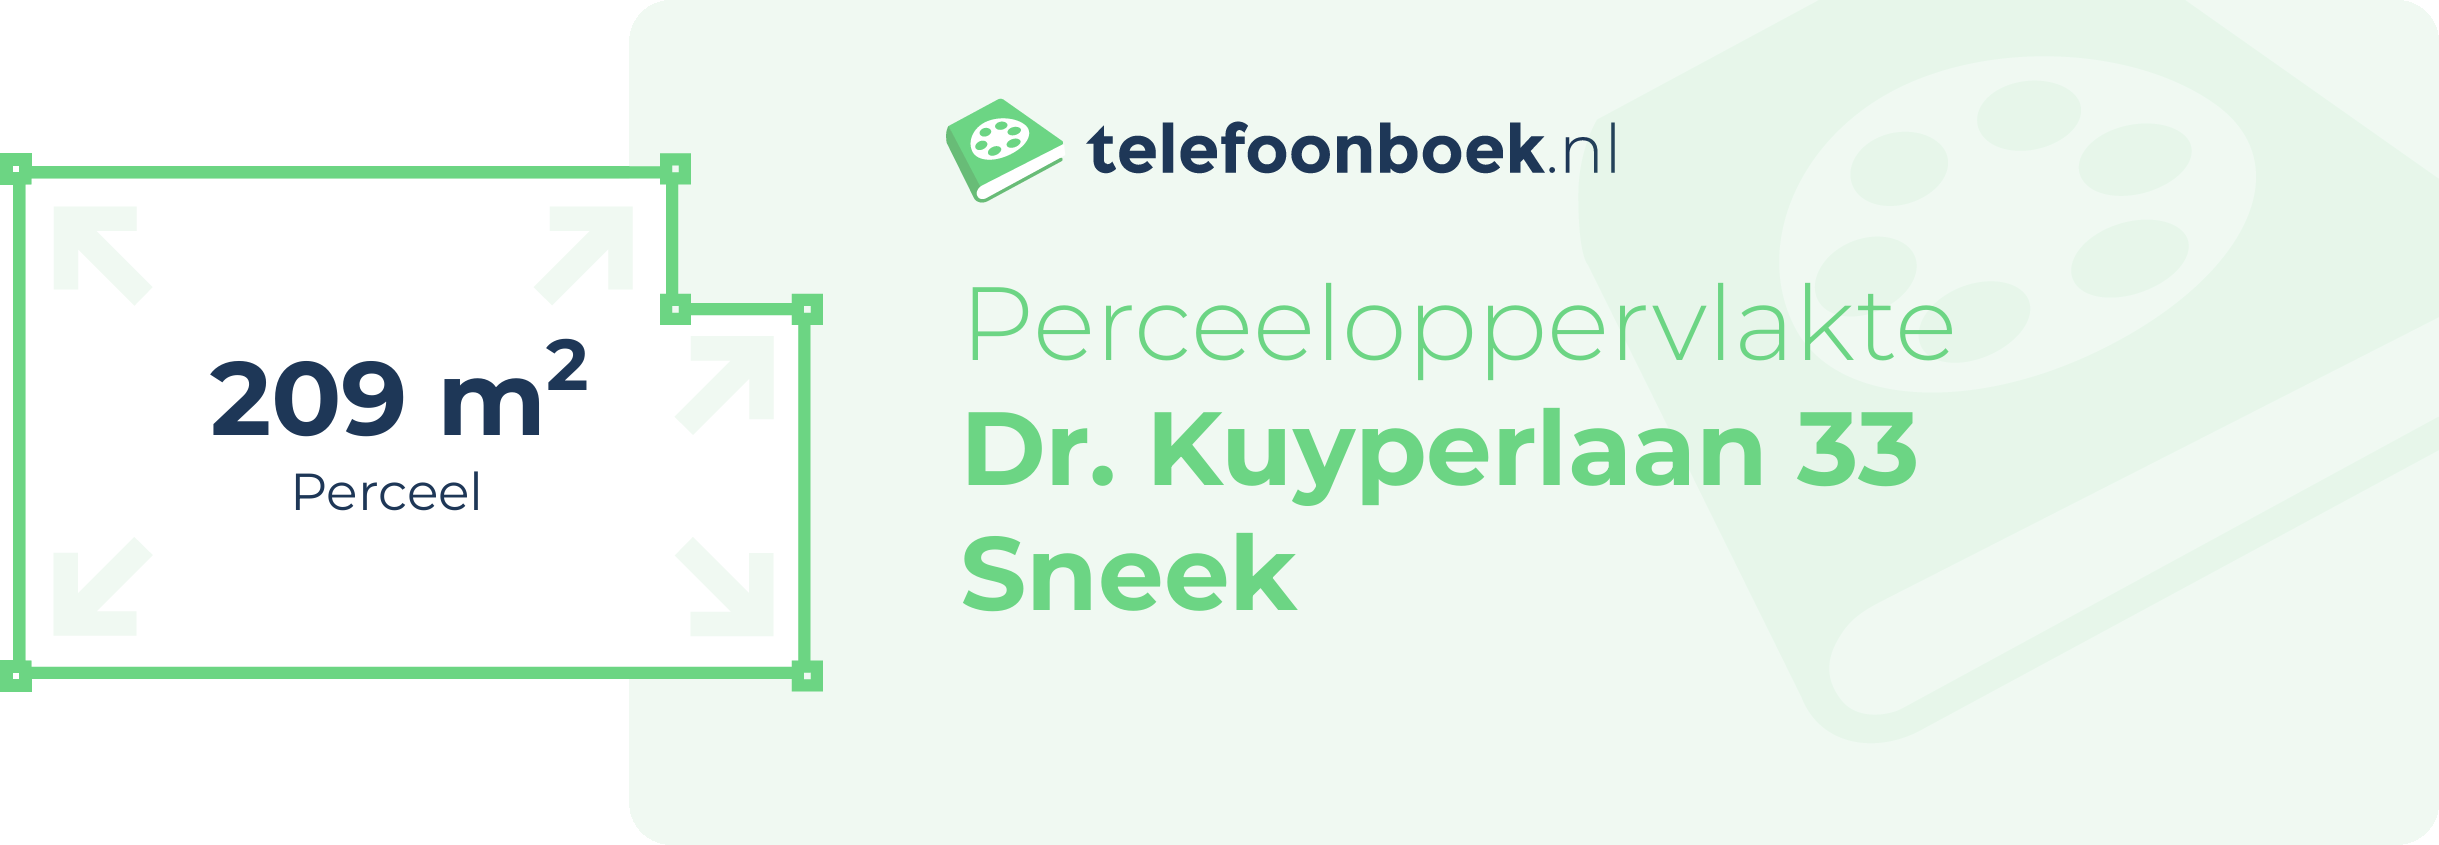 Perceeloppervlakte Dr. Kuyperlaan 33 Sneek